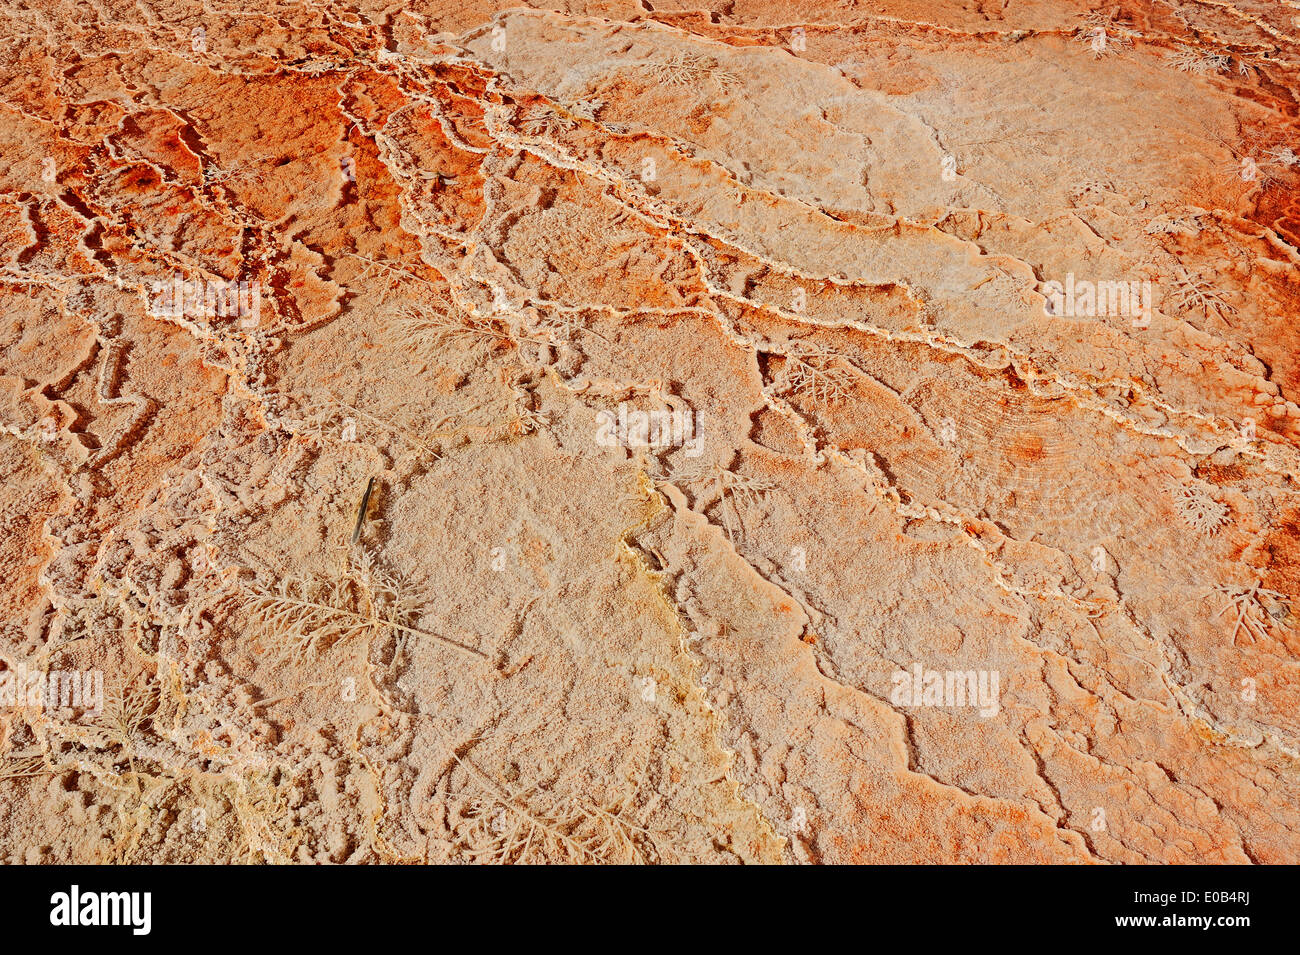 Algal-bacterial mats and mineral deposits at hot spring, Mammoth Hot Springs, Yellowstone national park, Wyoming, USA Stock Photo